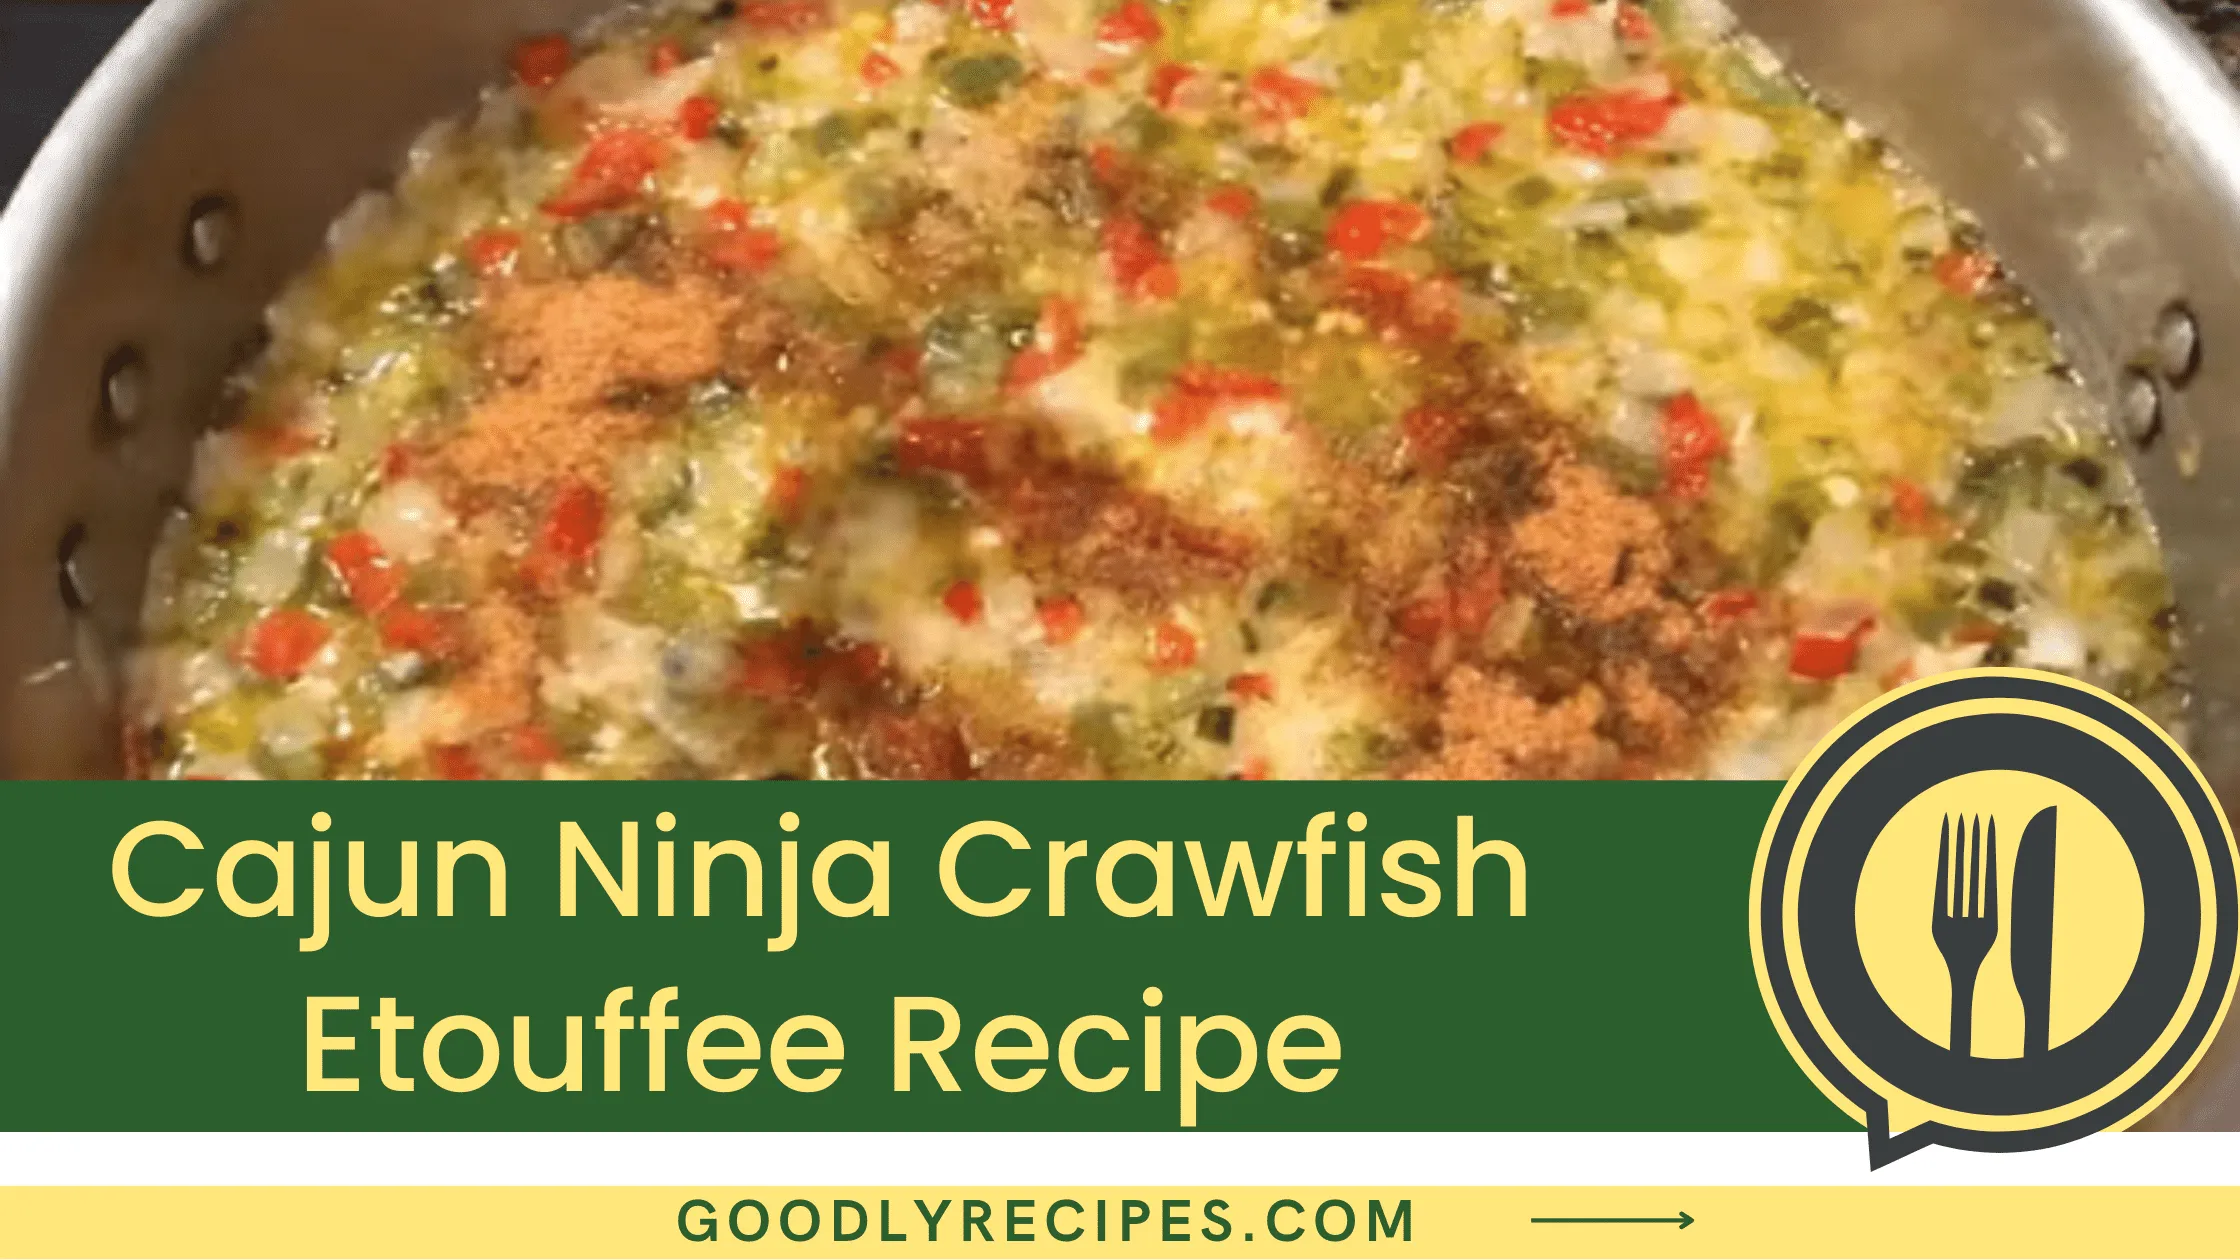 Cajun Ninja Crawfish Etouffee Recipe - Step By Step Easy Guide